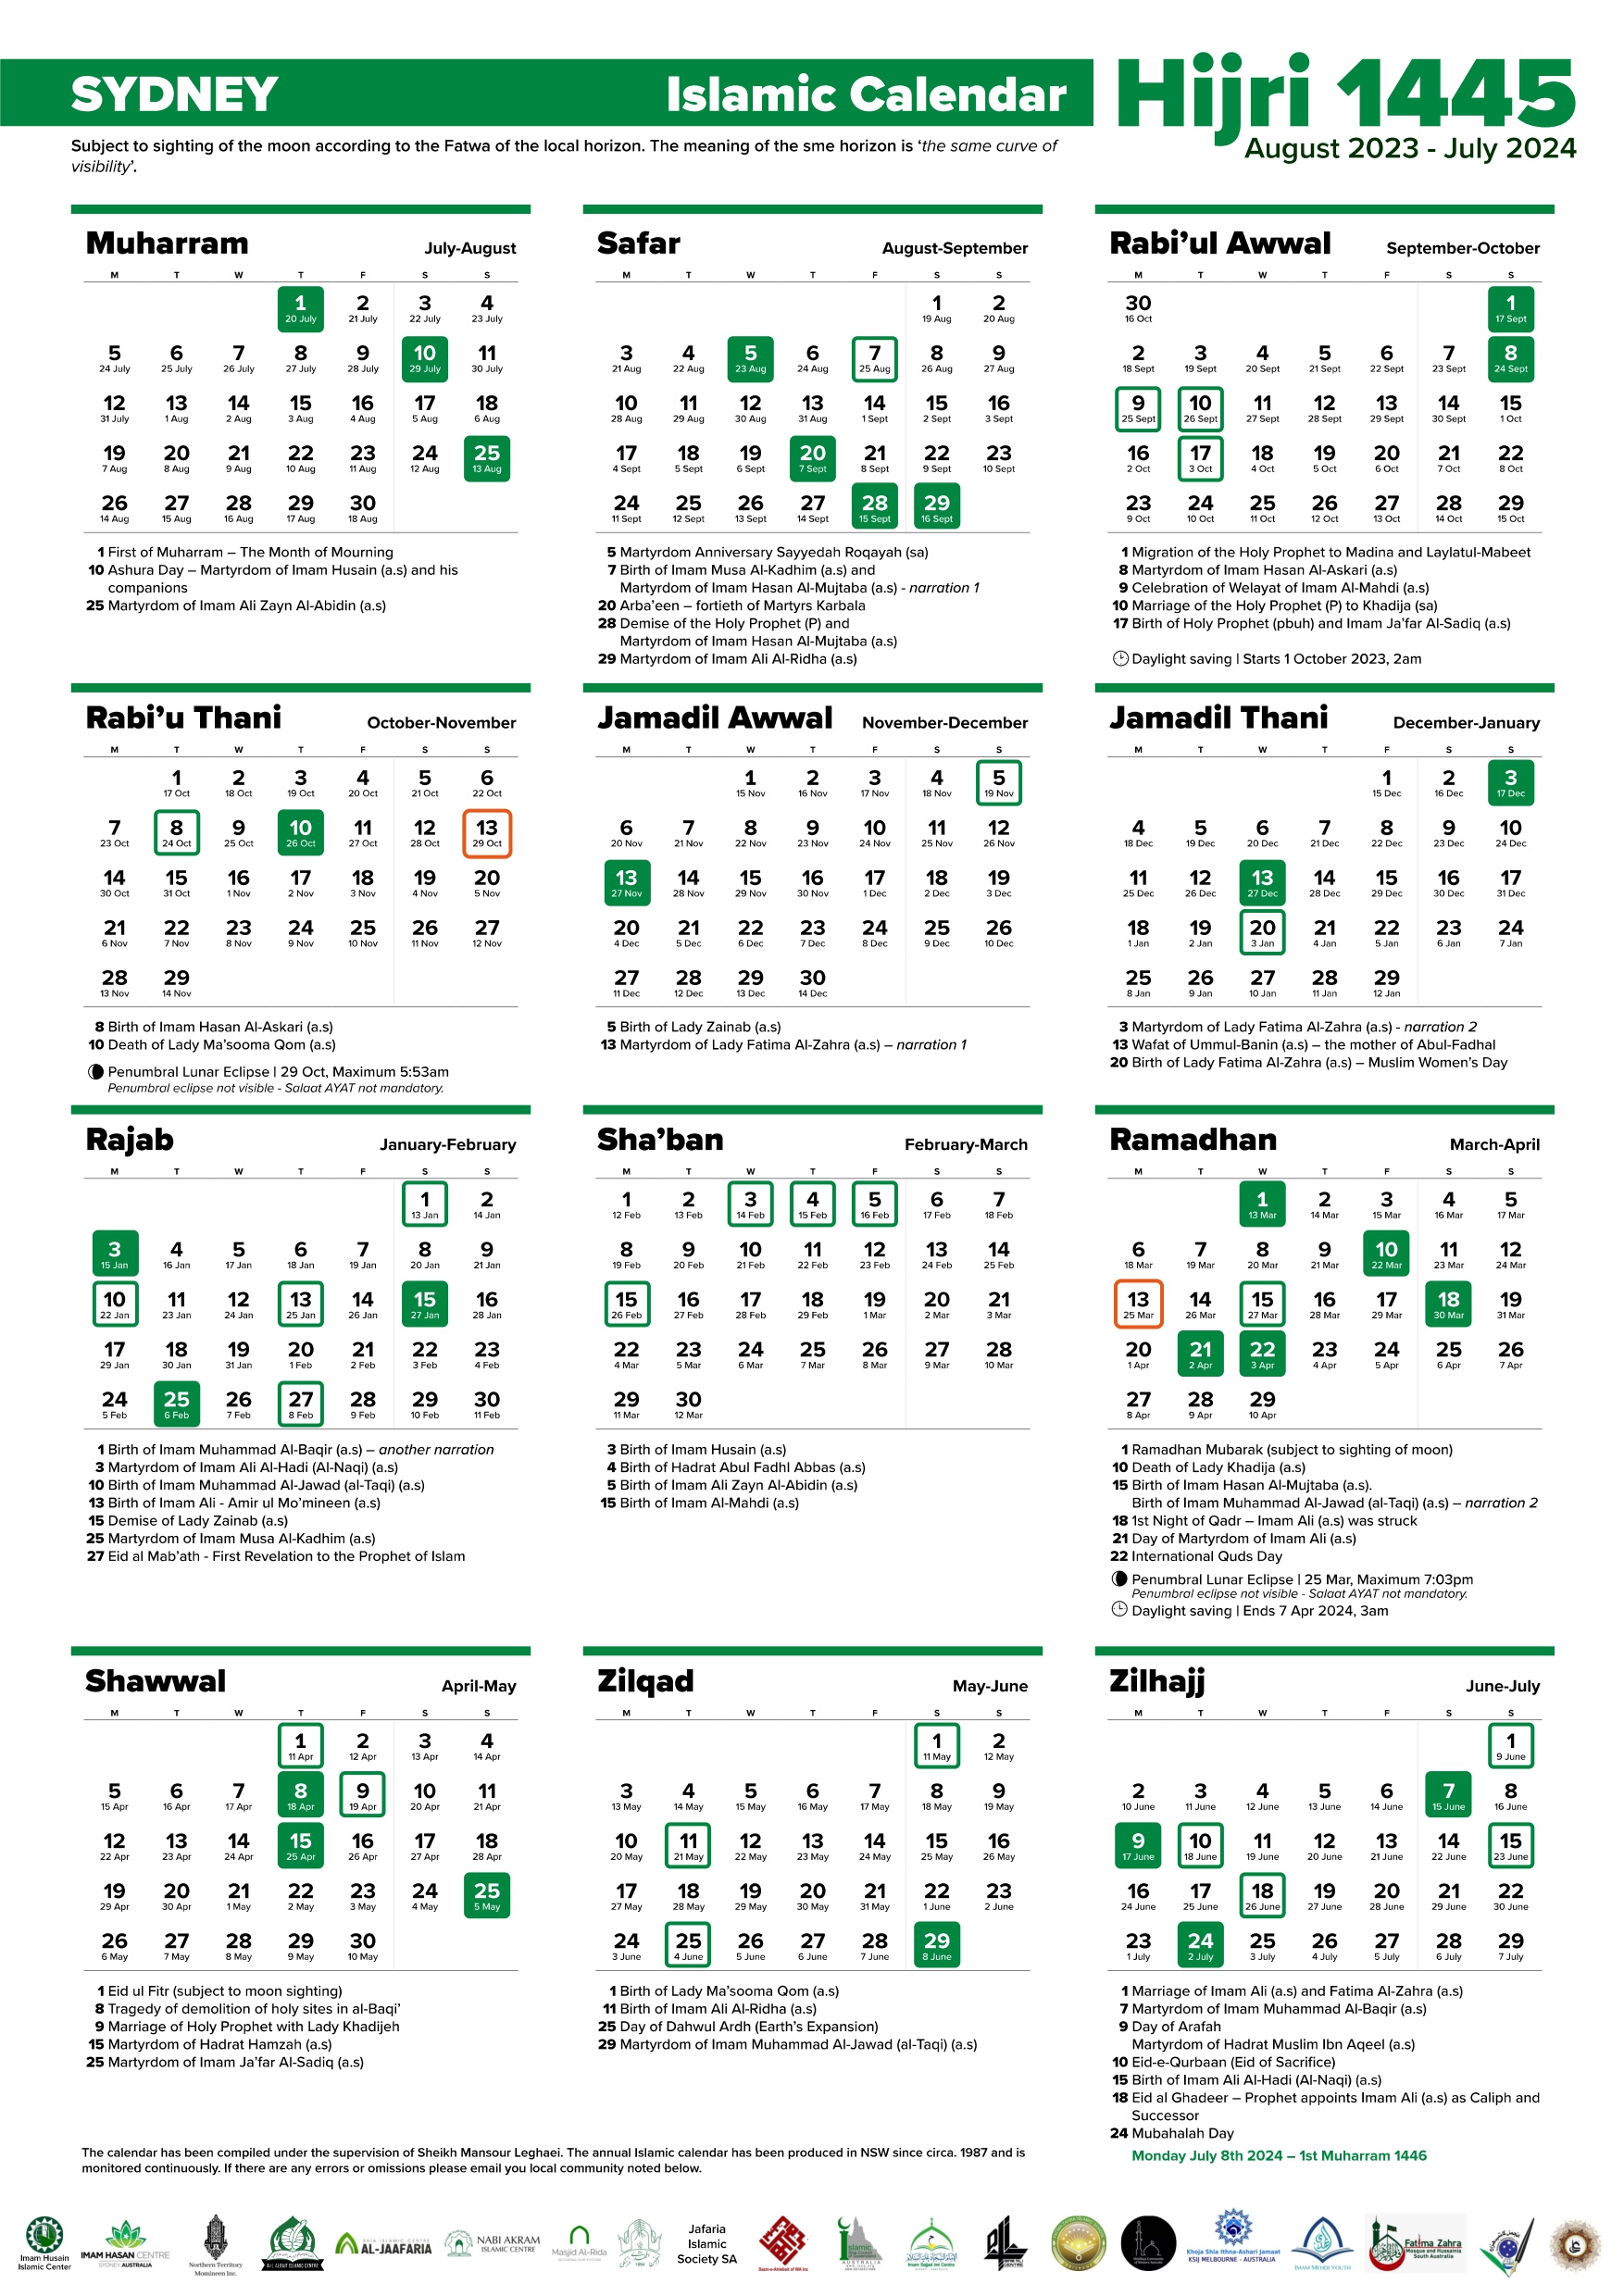 Annual Islamic Calendar 1445 Ah / 2023-2024 Ad – Imam Husain with Muslim Calendar July 2024